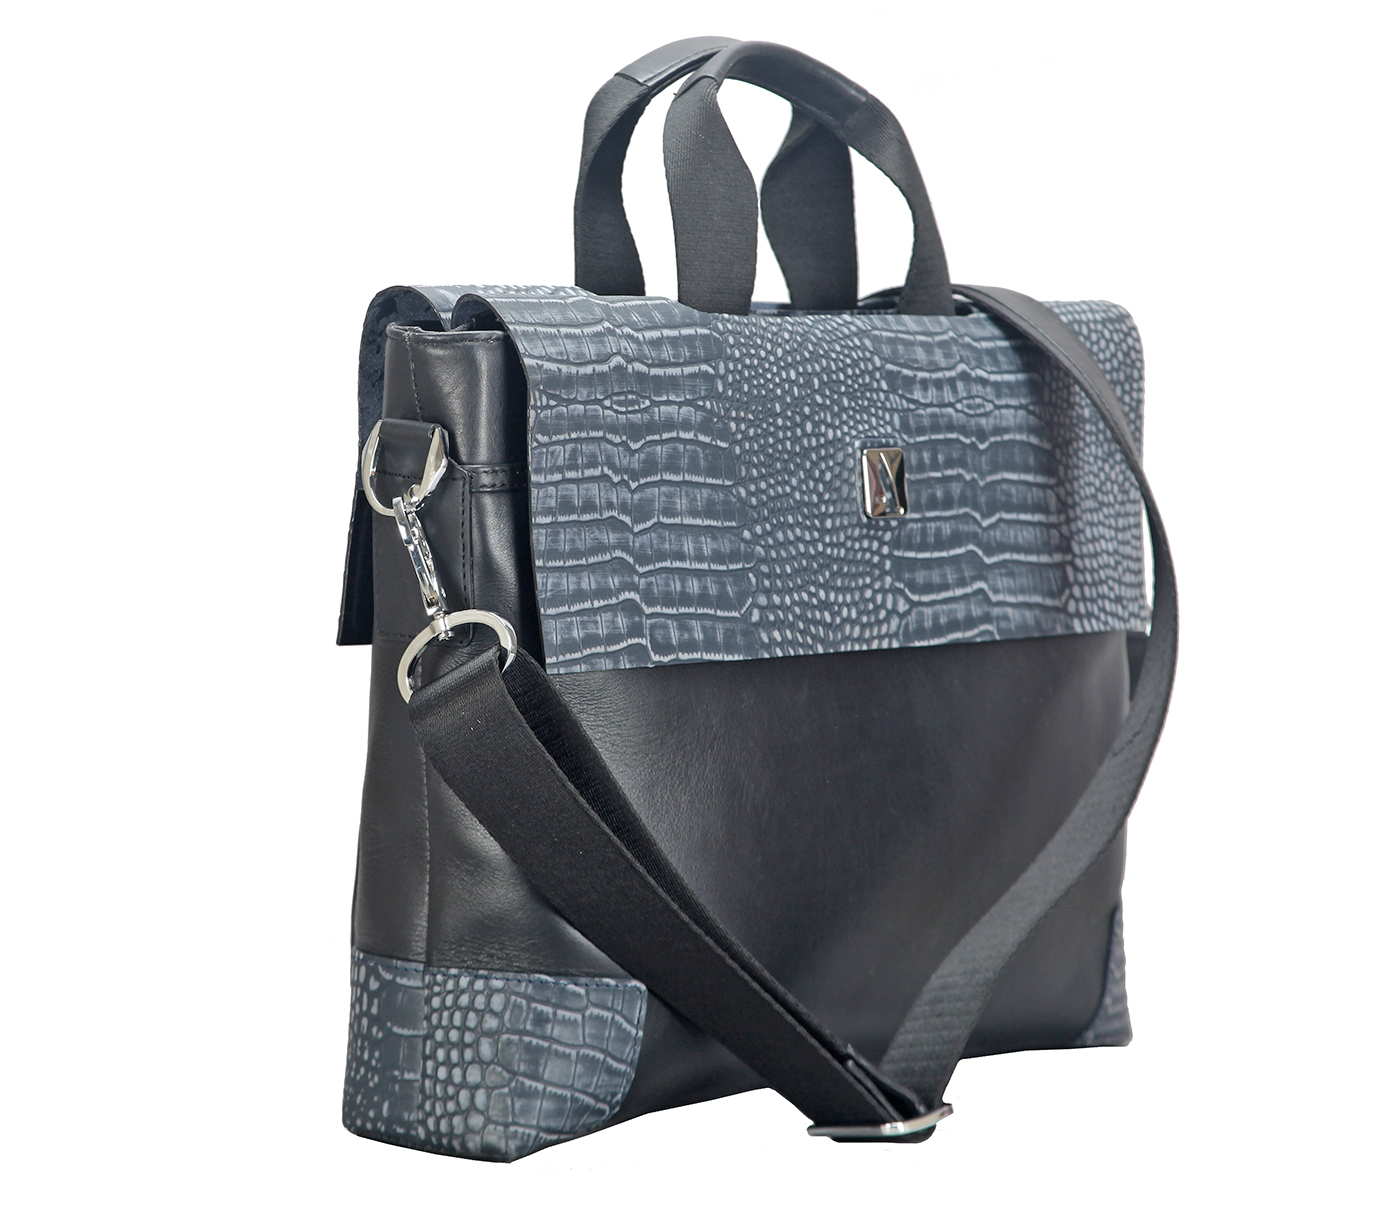 Portfolio / Laptop Bag-Ebner-Laptop, portfolio office executive bag in Genuine Leather - Black/Blue